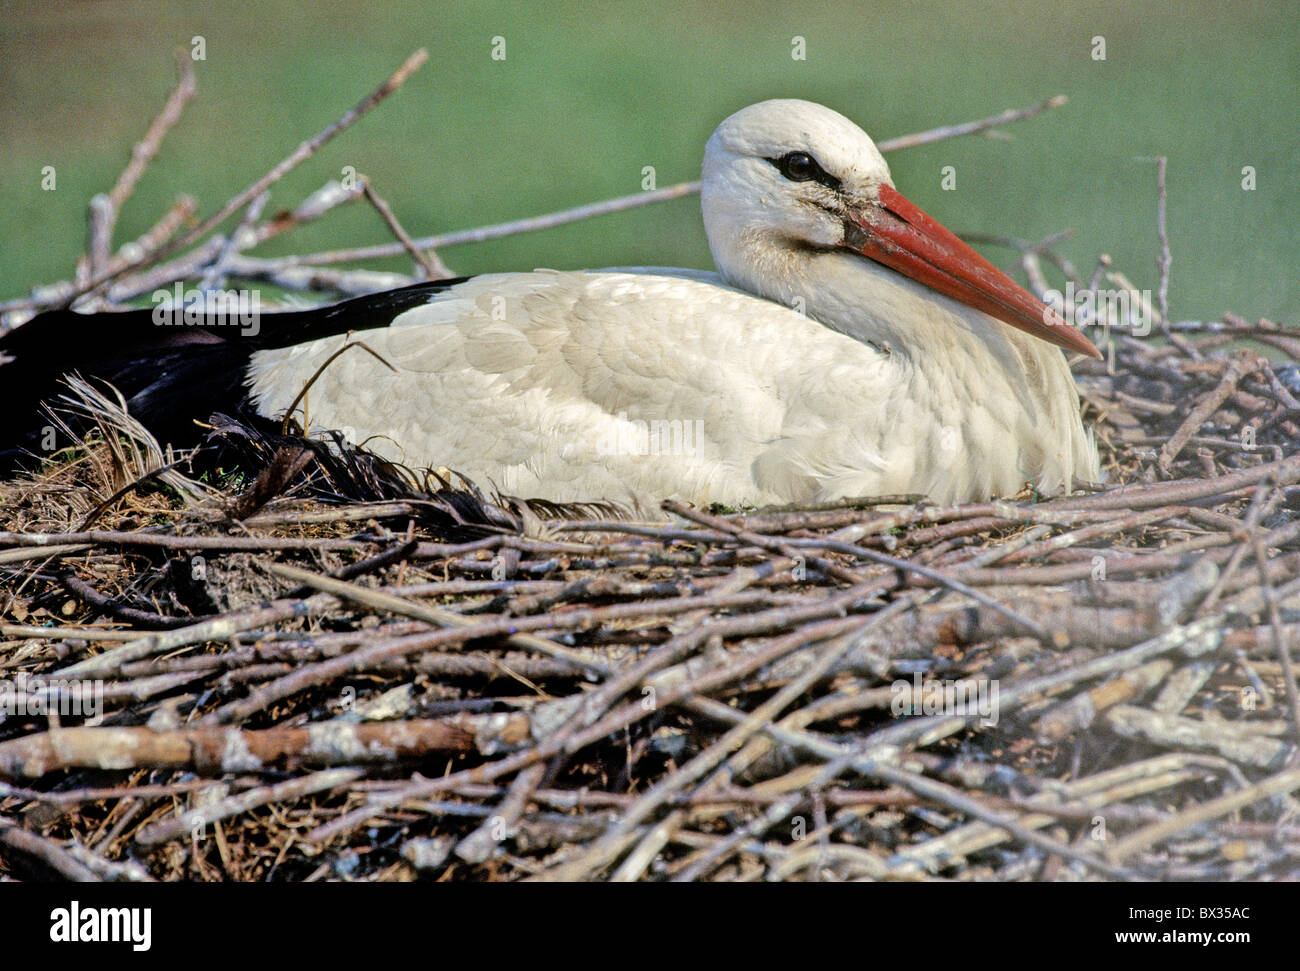 Cigogne blanche Ciconia ciconia stork nest nid oiseaux oiseaux horst cigognes animaux animal Banque D'Images